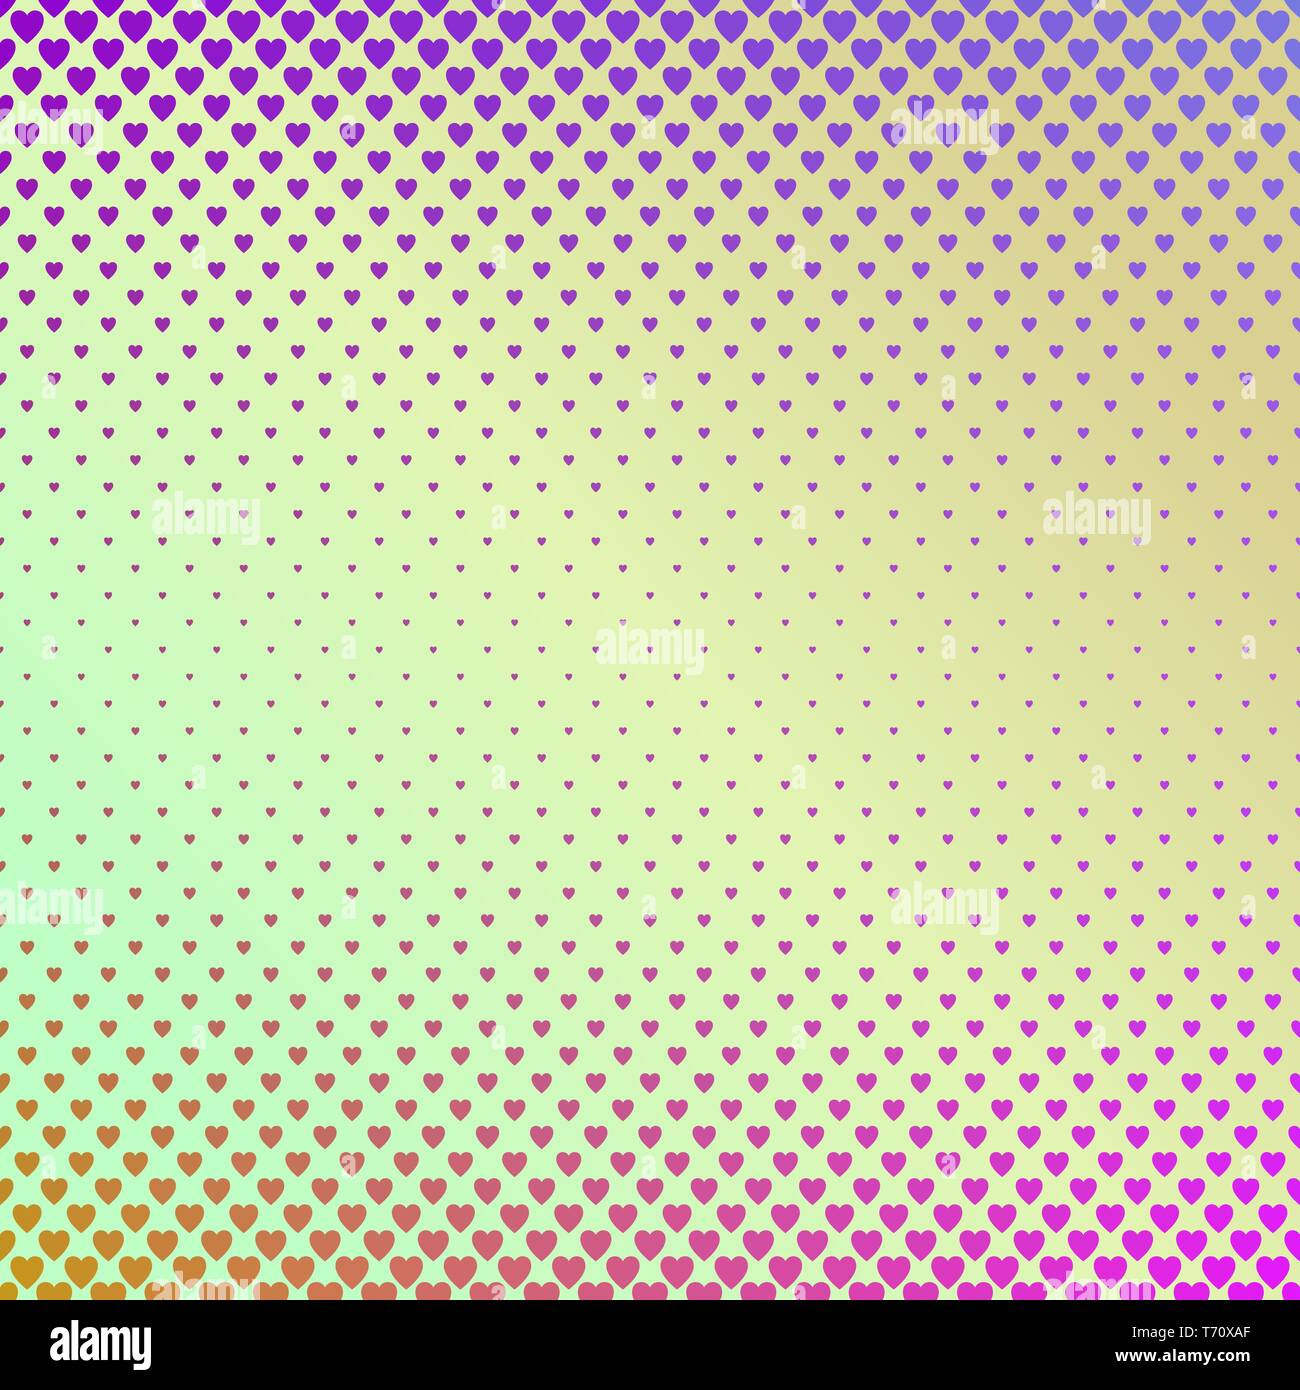 Retro gradient Herz Muster Hintergrund design-bunten Vektorgrafik Stock Vektor